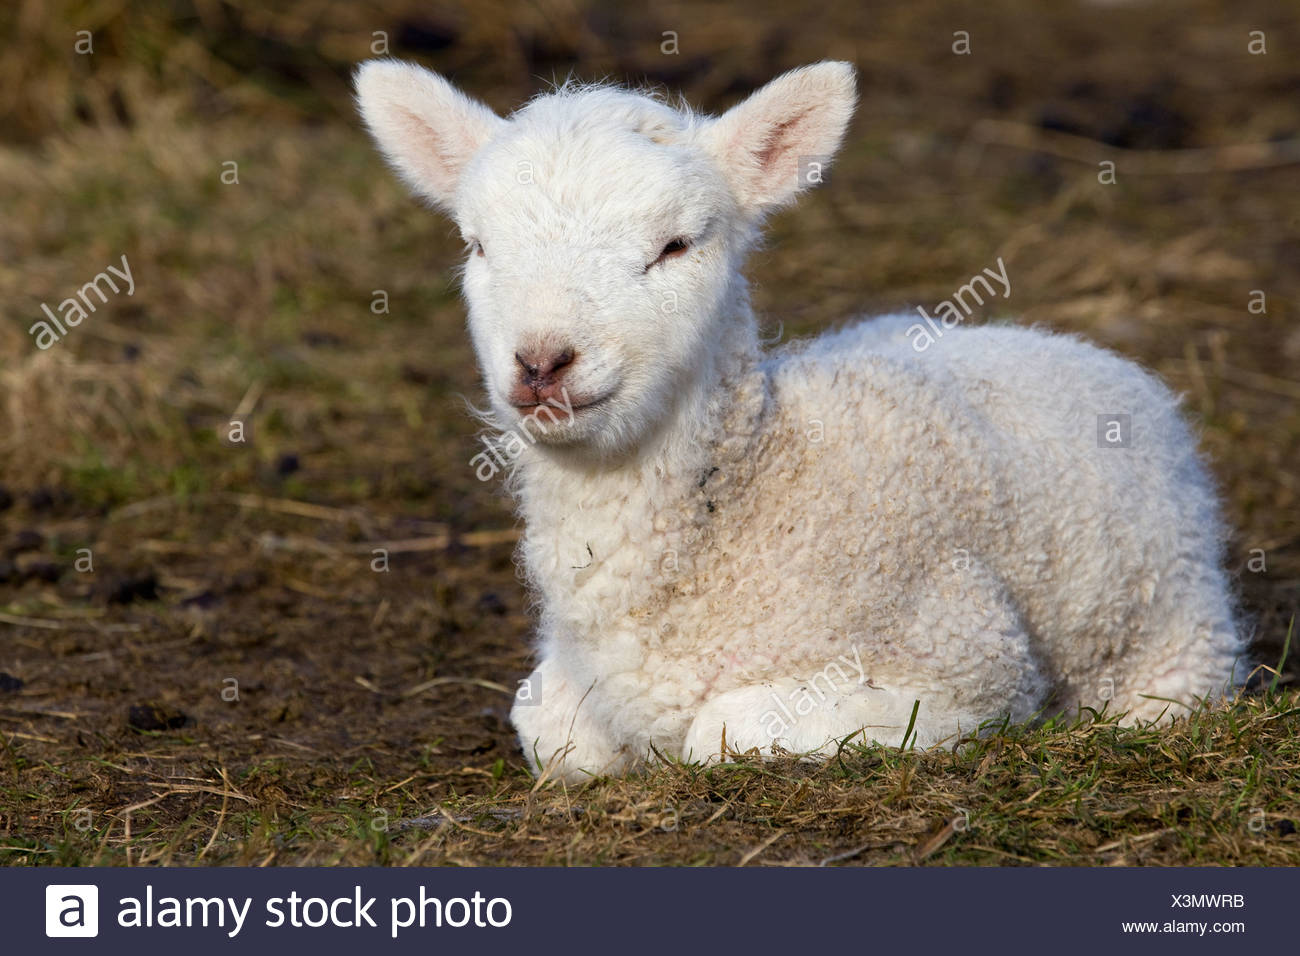 Lamb, Paschal Lamb, lying down, North Friesland, Germany, Europe - Stock